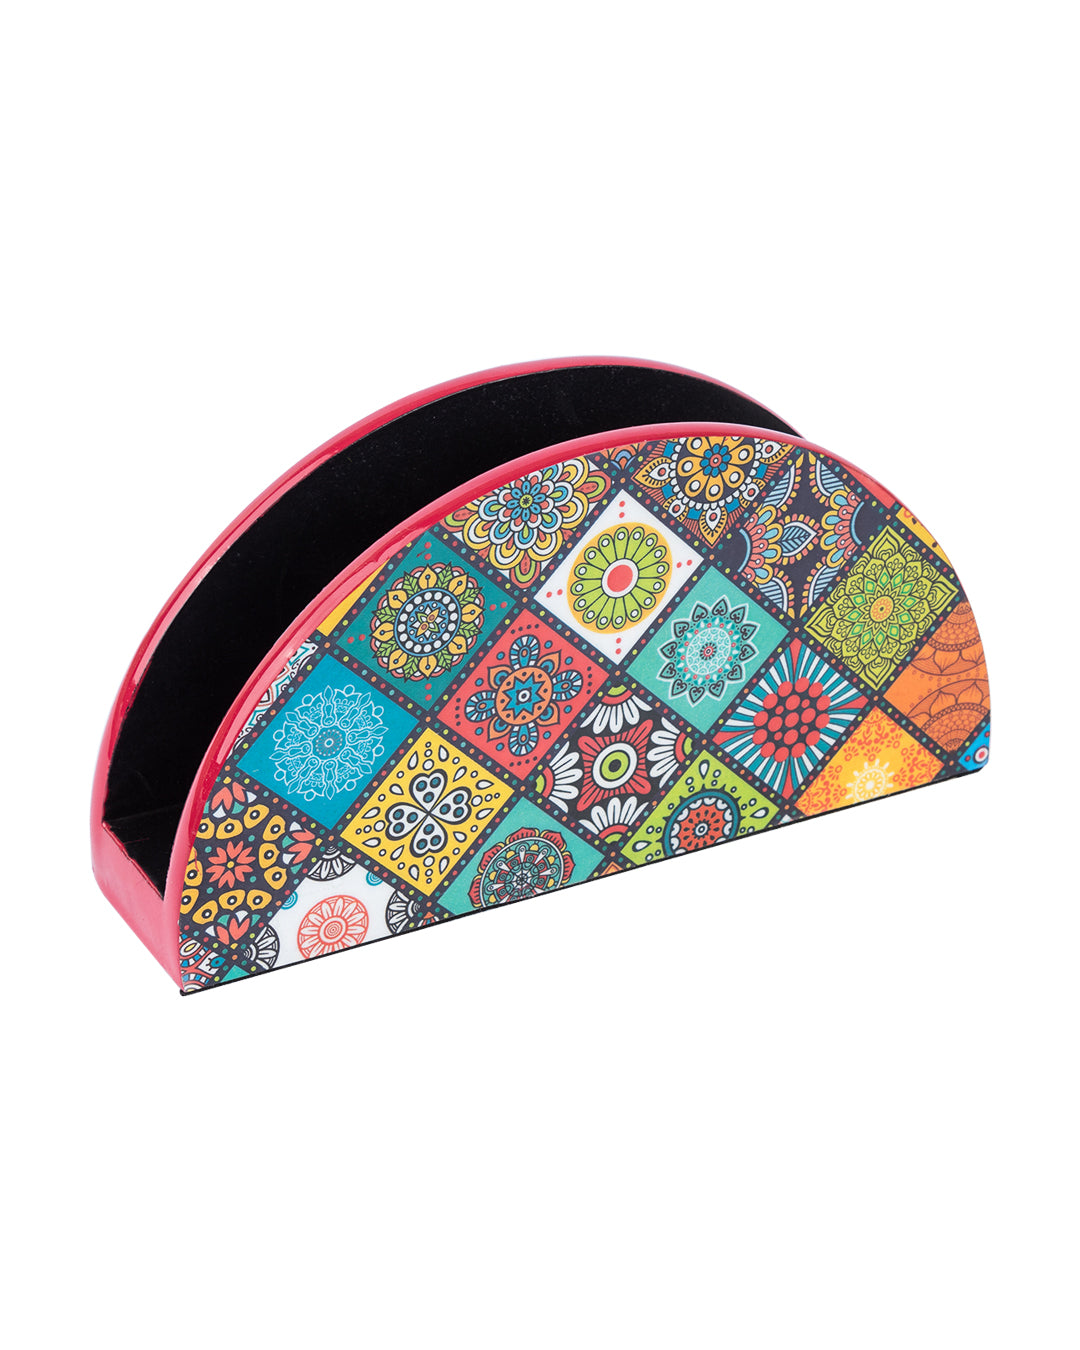 VON CASA Napkin Holder, Multiple Style Print, Multicolour, MDF